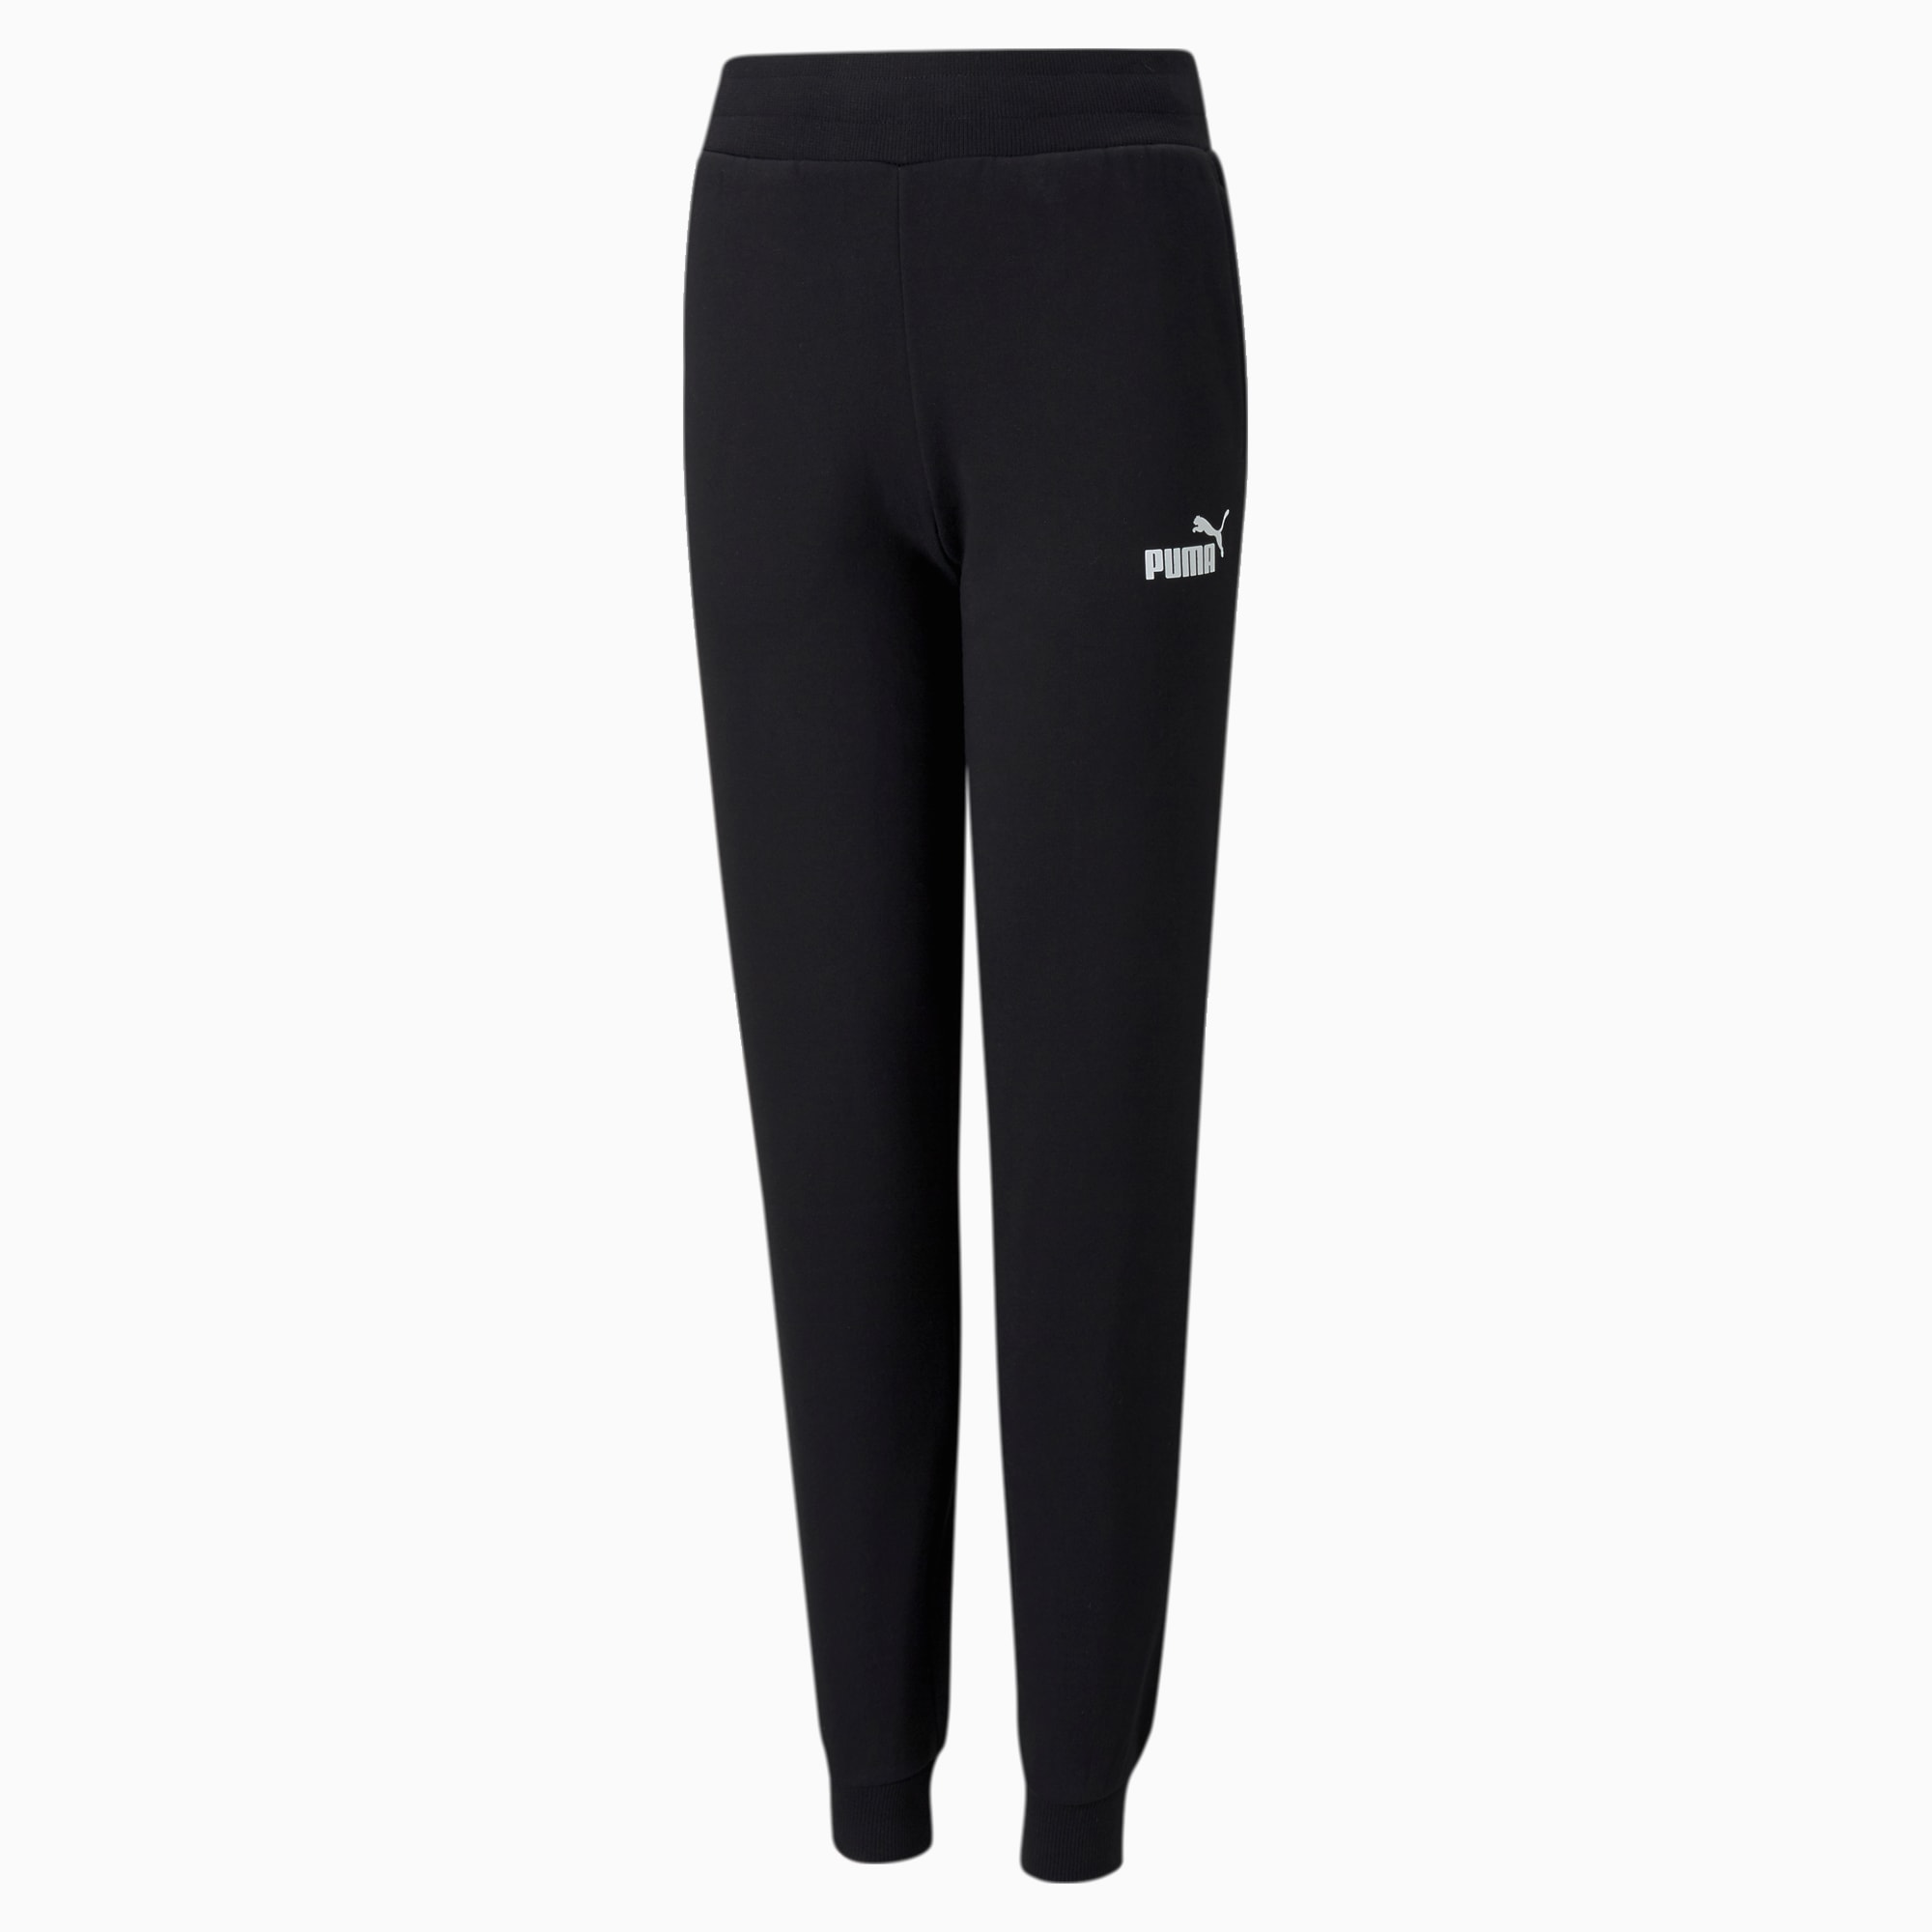 PUMA Essentials Youth Sweatpants, Black, Size 176, Clothing